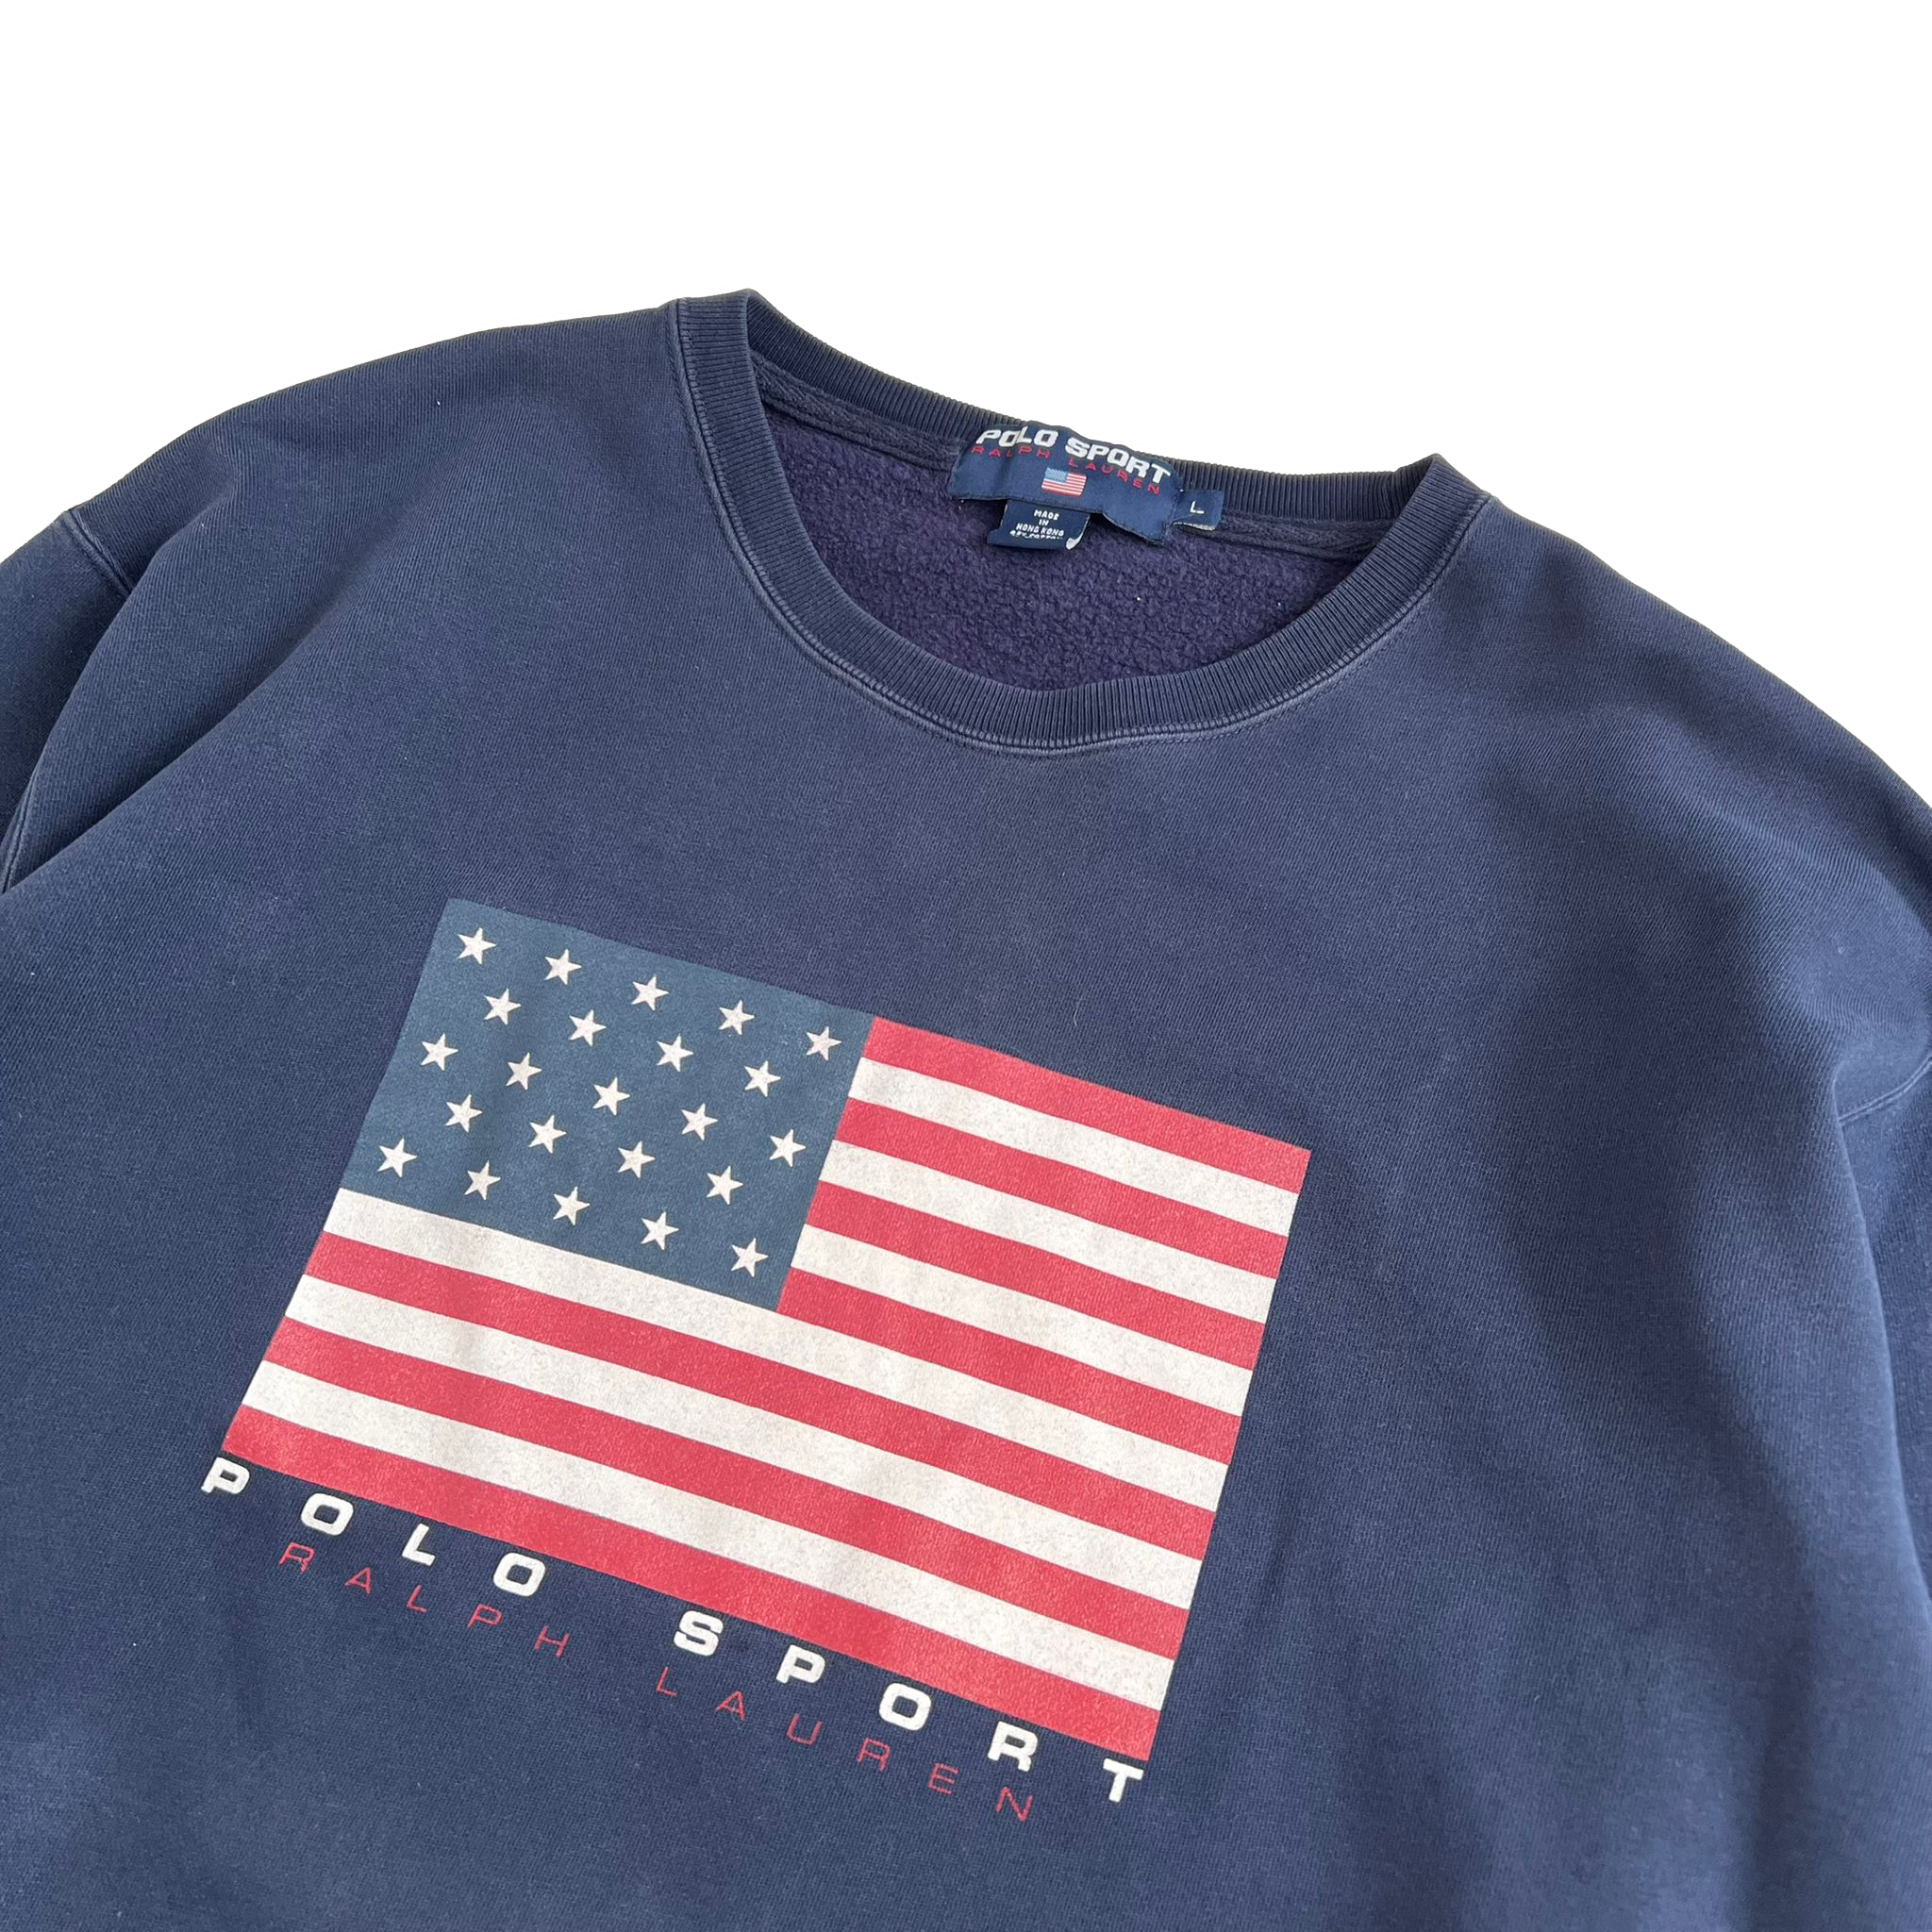 90's Polo Sport sweatshirt